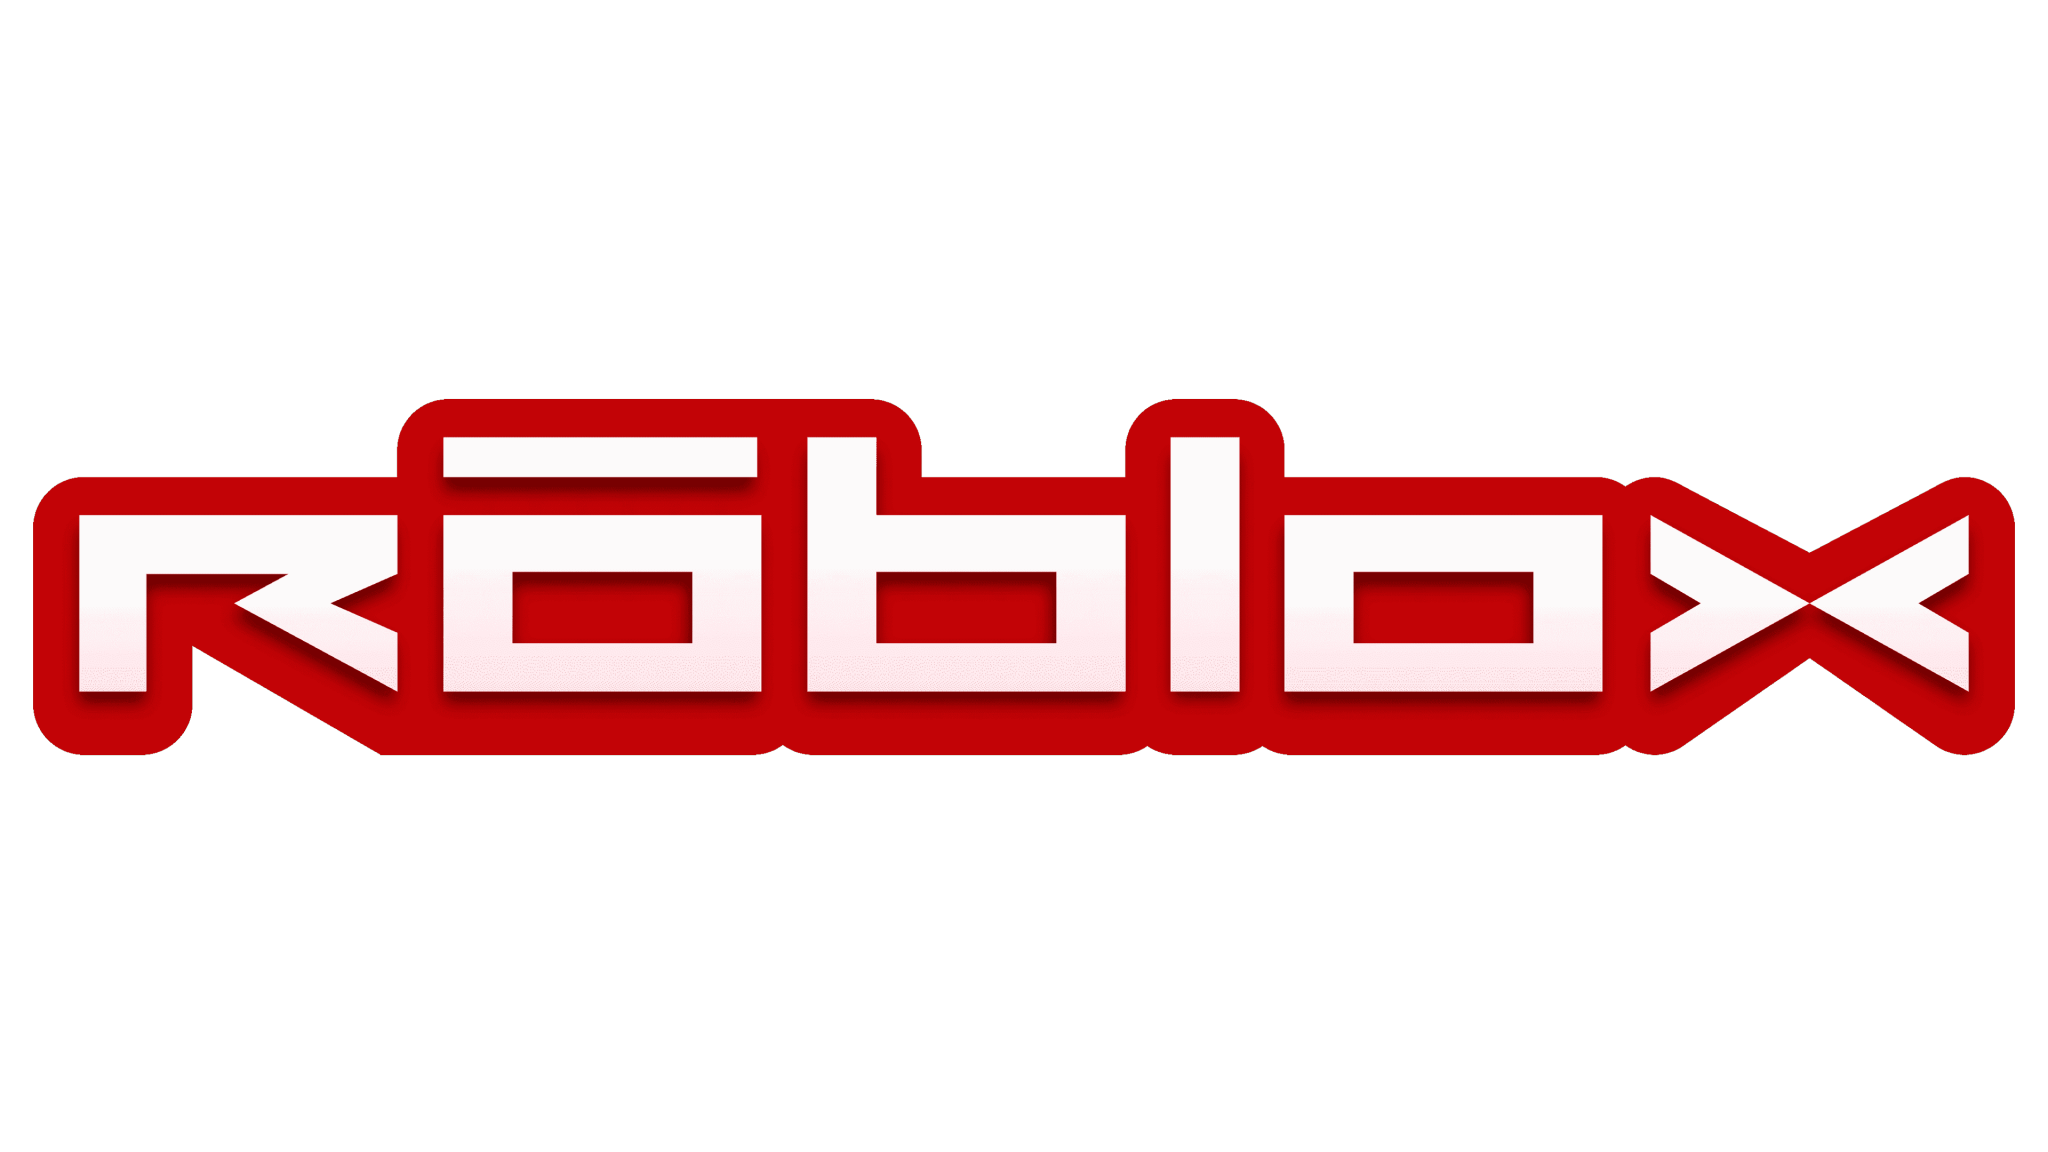 old roblox logo, roblox logo history, roblox logo evolution, history of roblox, typography logo